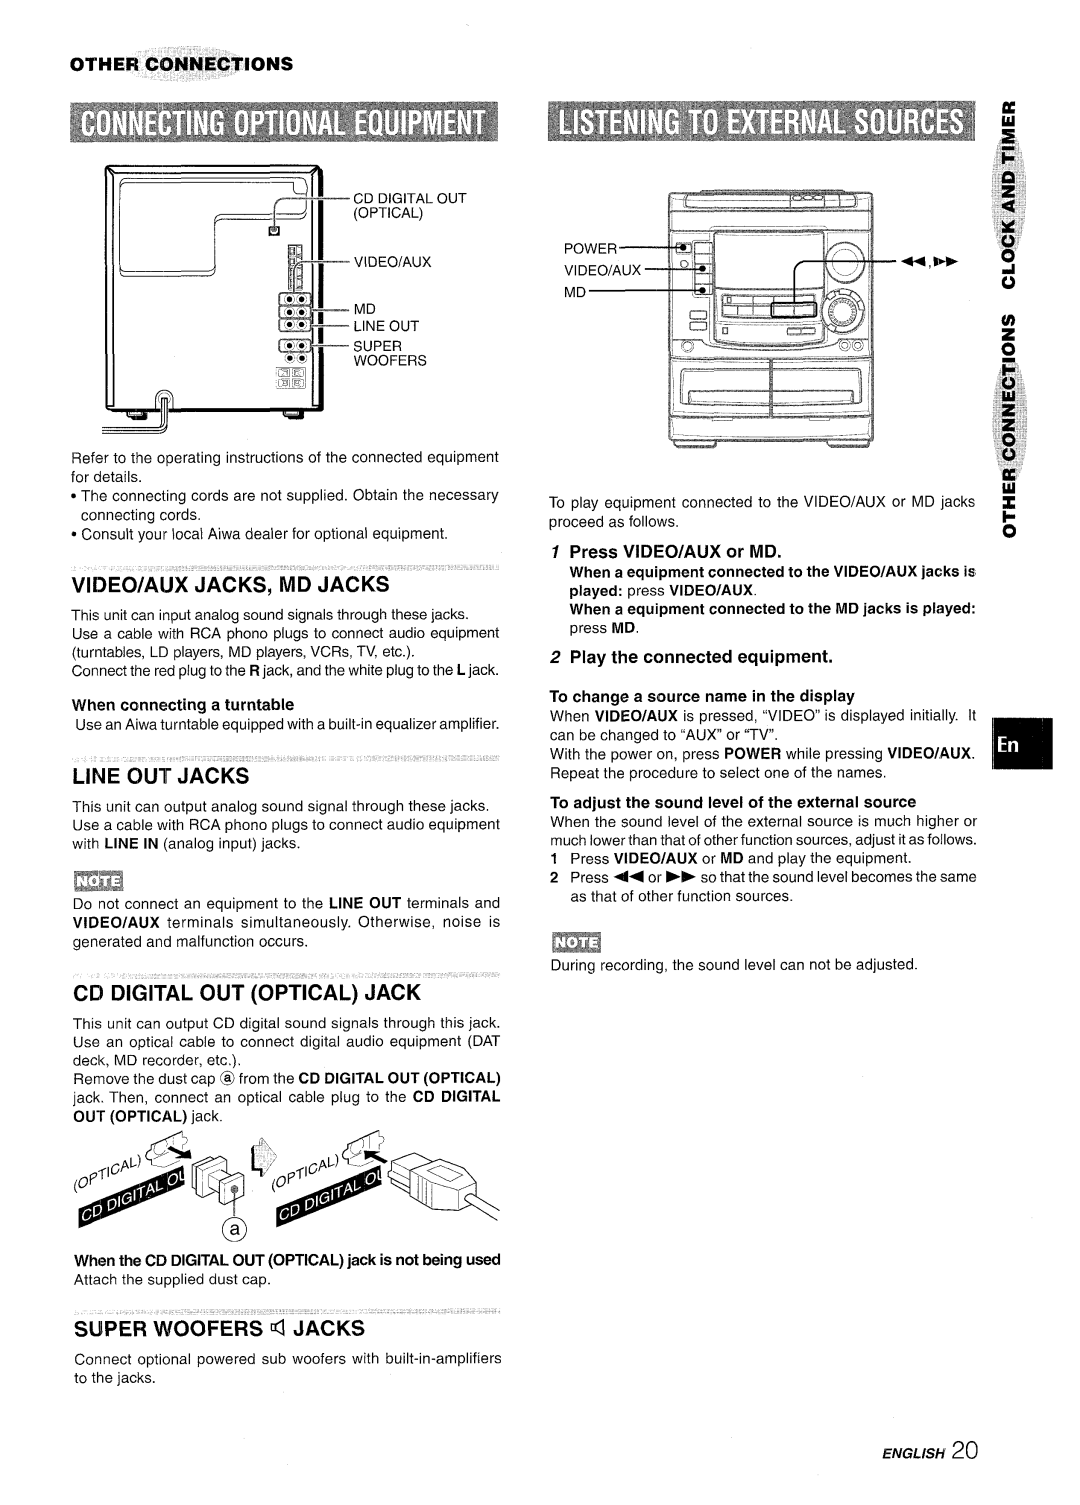 Aiwa NSX-A508 manual Video/Aijx Jacks, Md Jacks, Cd Digital Out Optical Jack, Super Woofers ~ Jacks, Press VIDEO/AUX or MD 